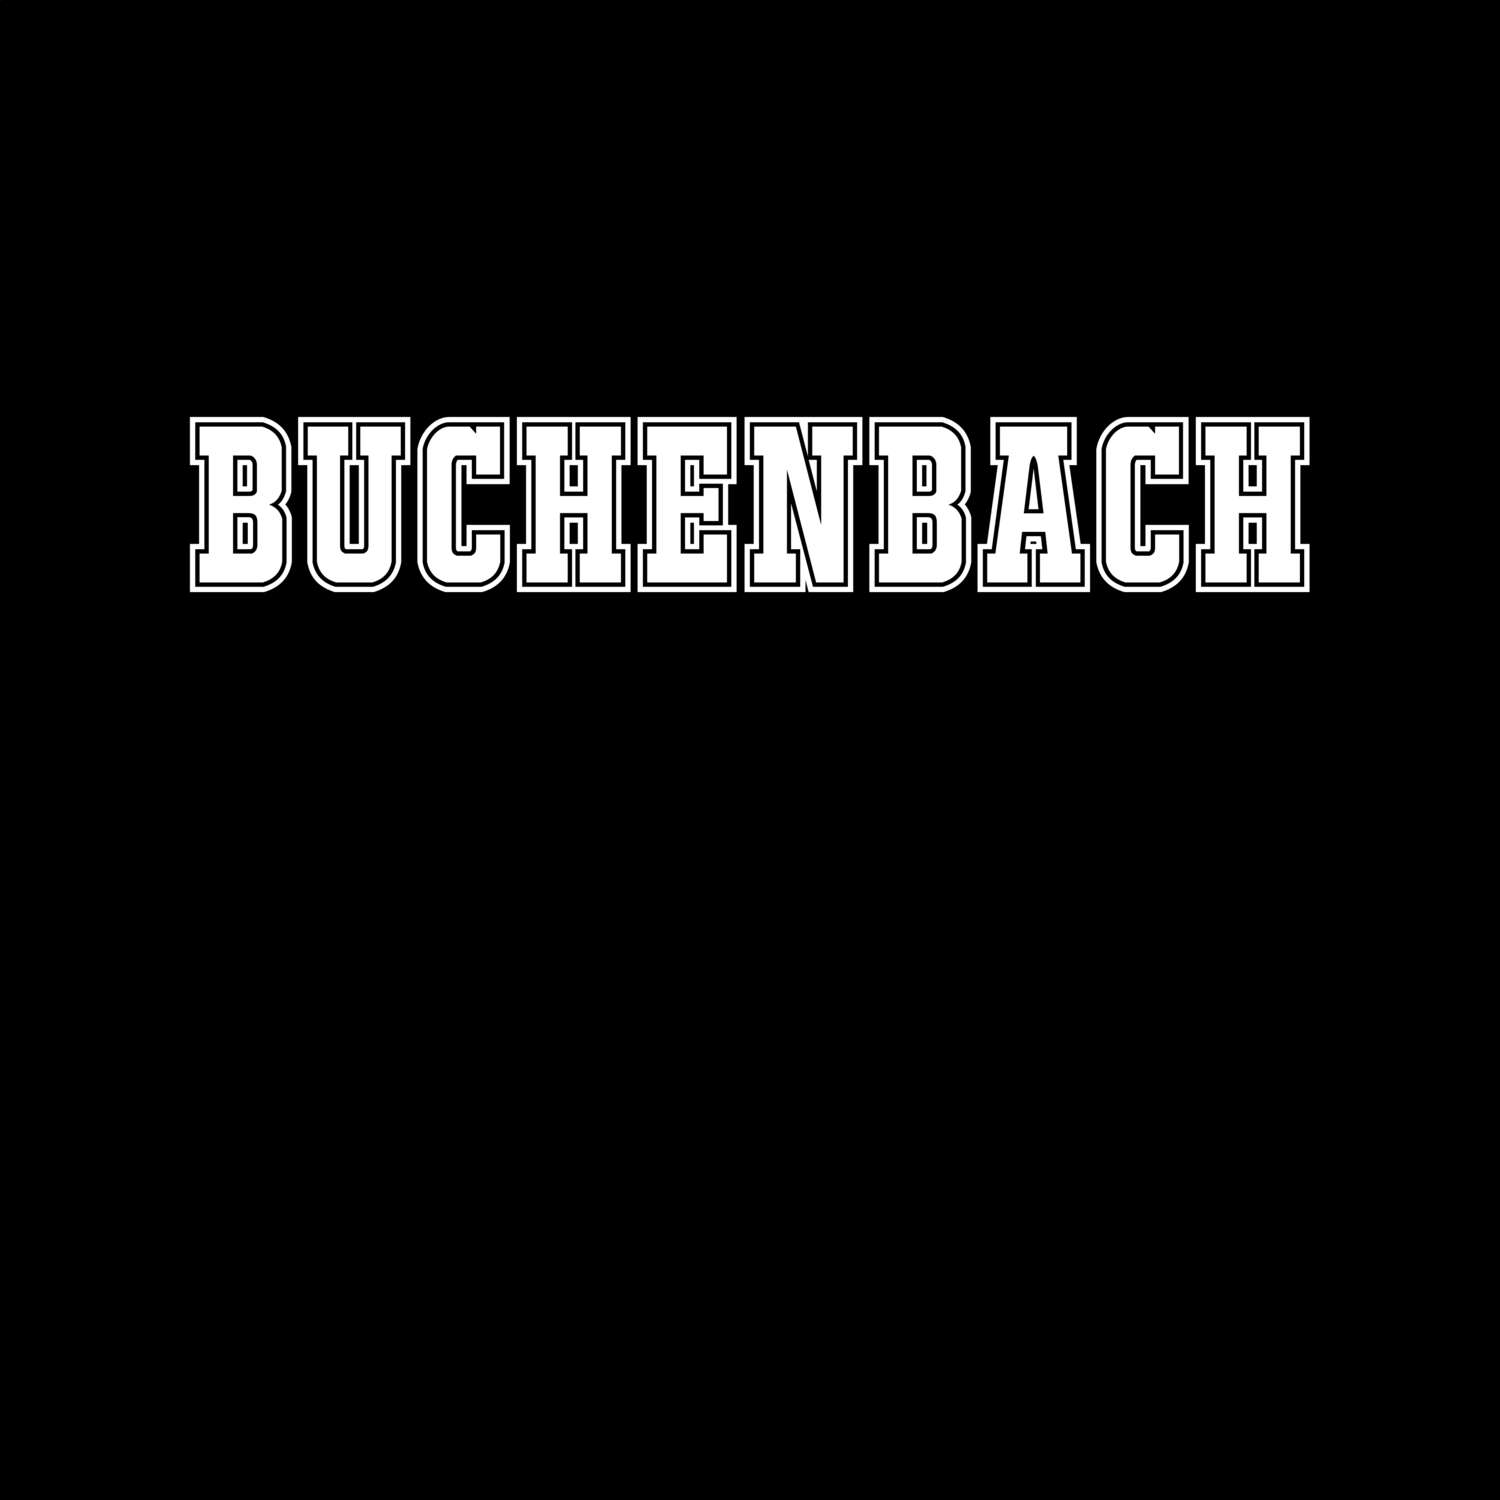 Buchenbach T-Shirt »Classic«